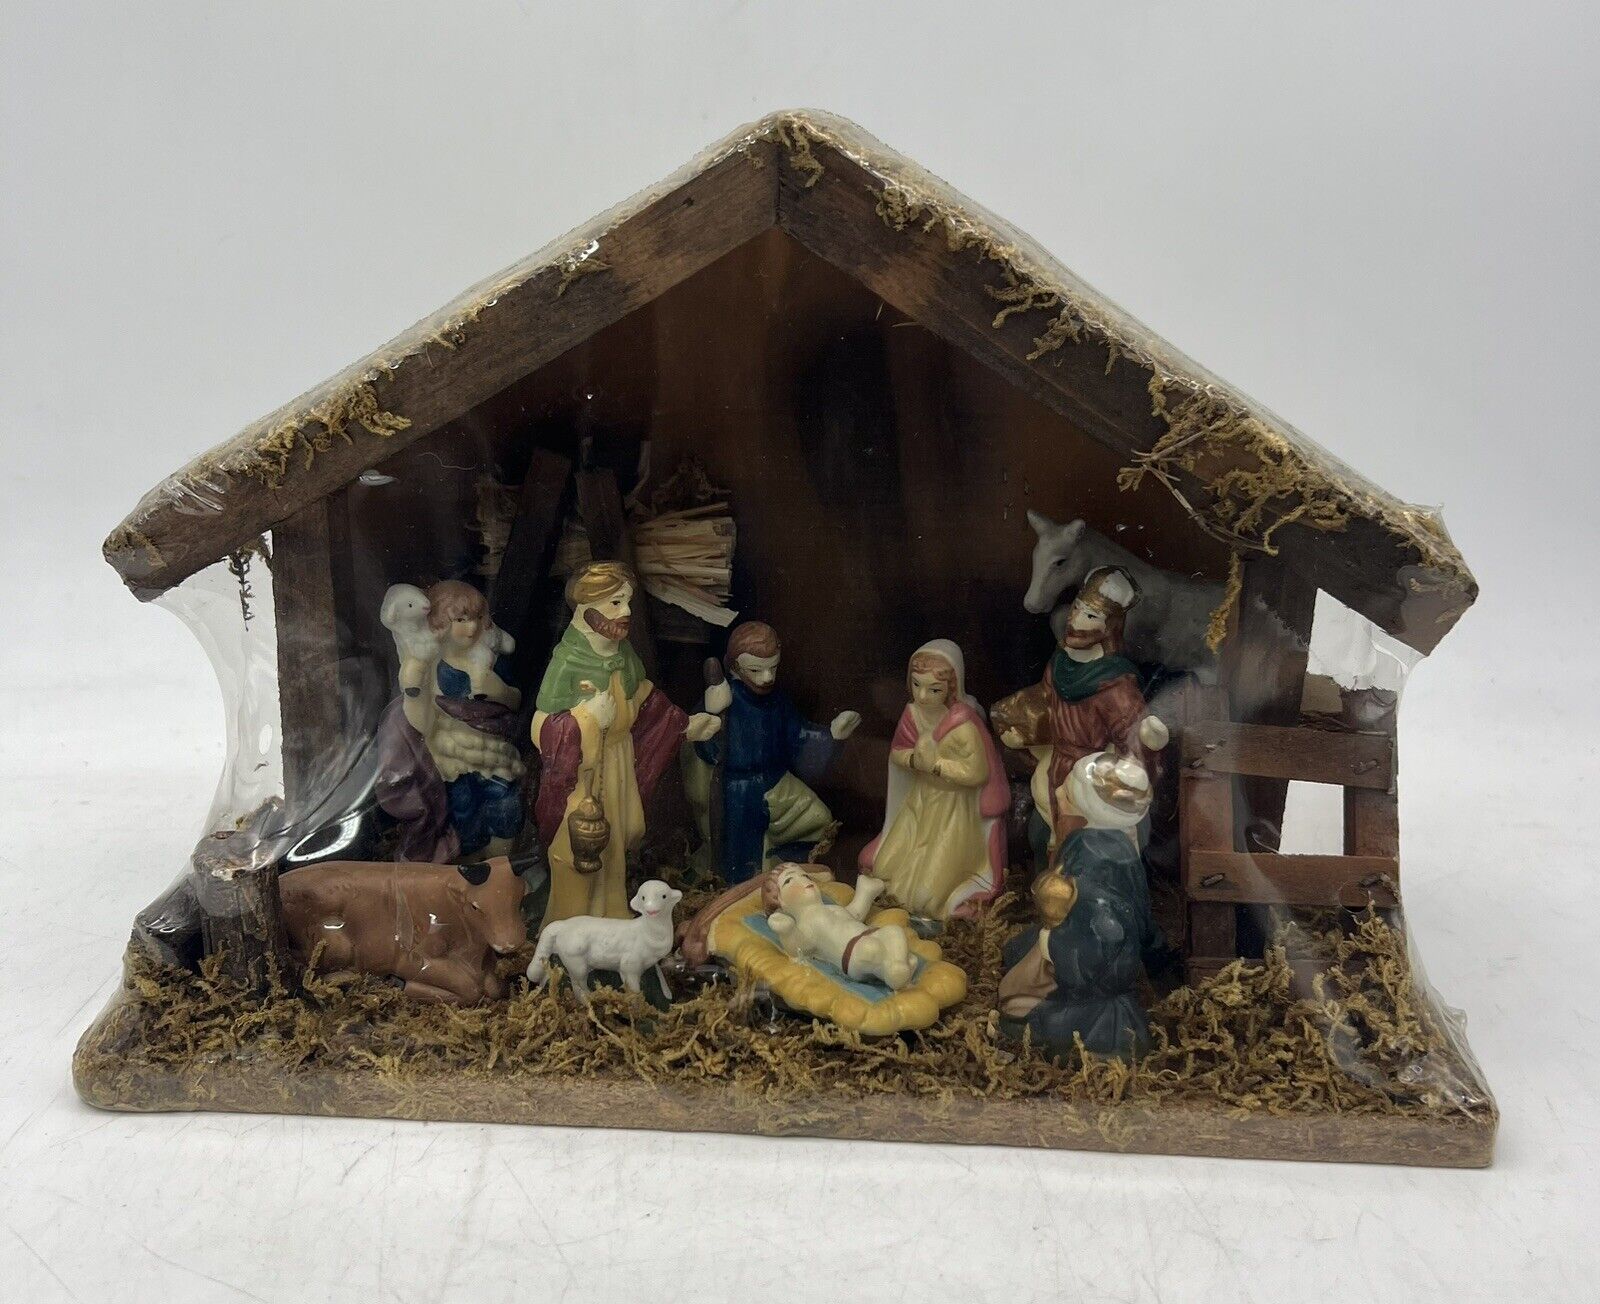 Vintage Christmas Nativity Set 11 Static Piece Ceramic Wood Creche Stable Manger